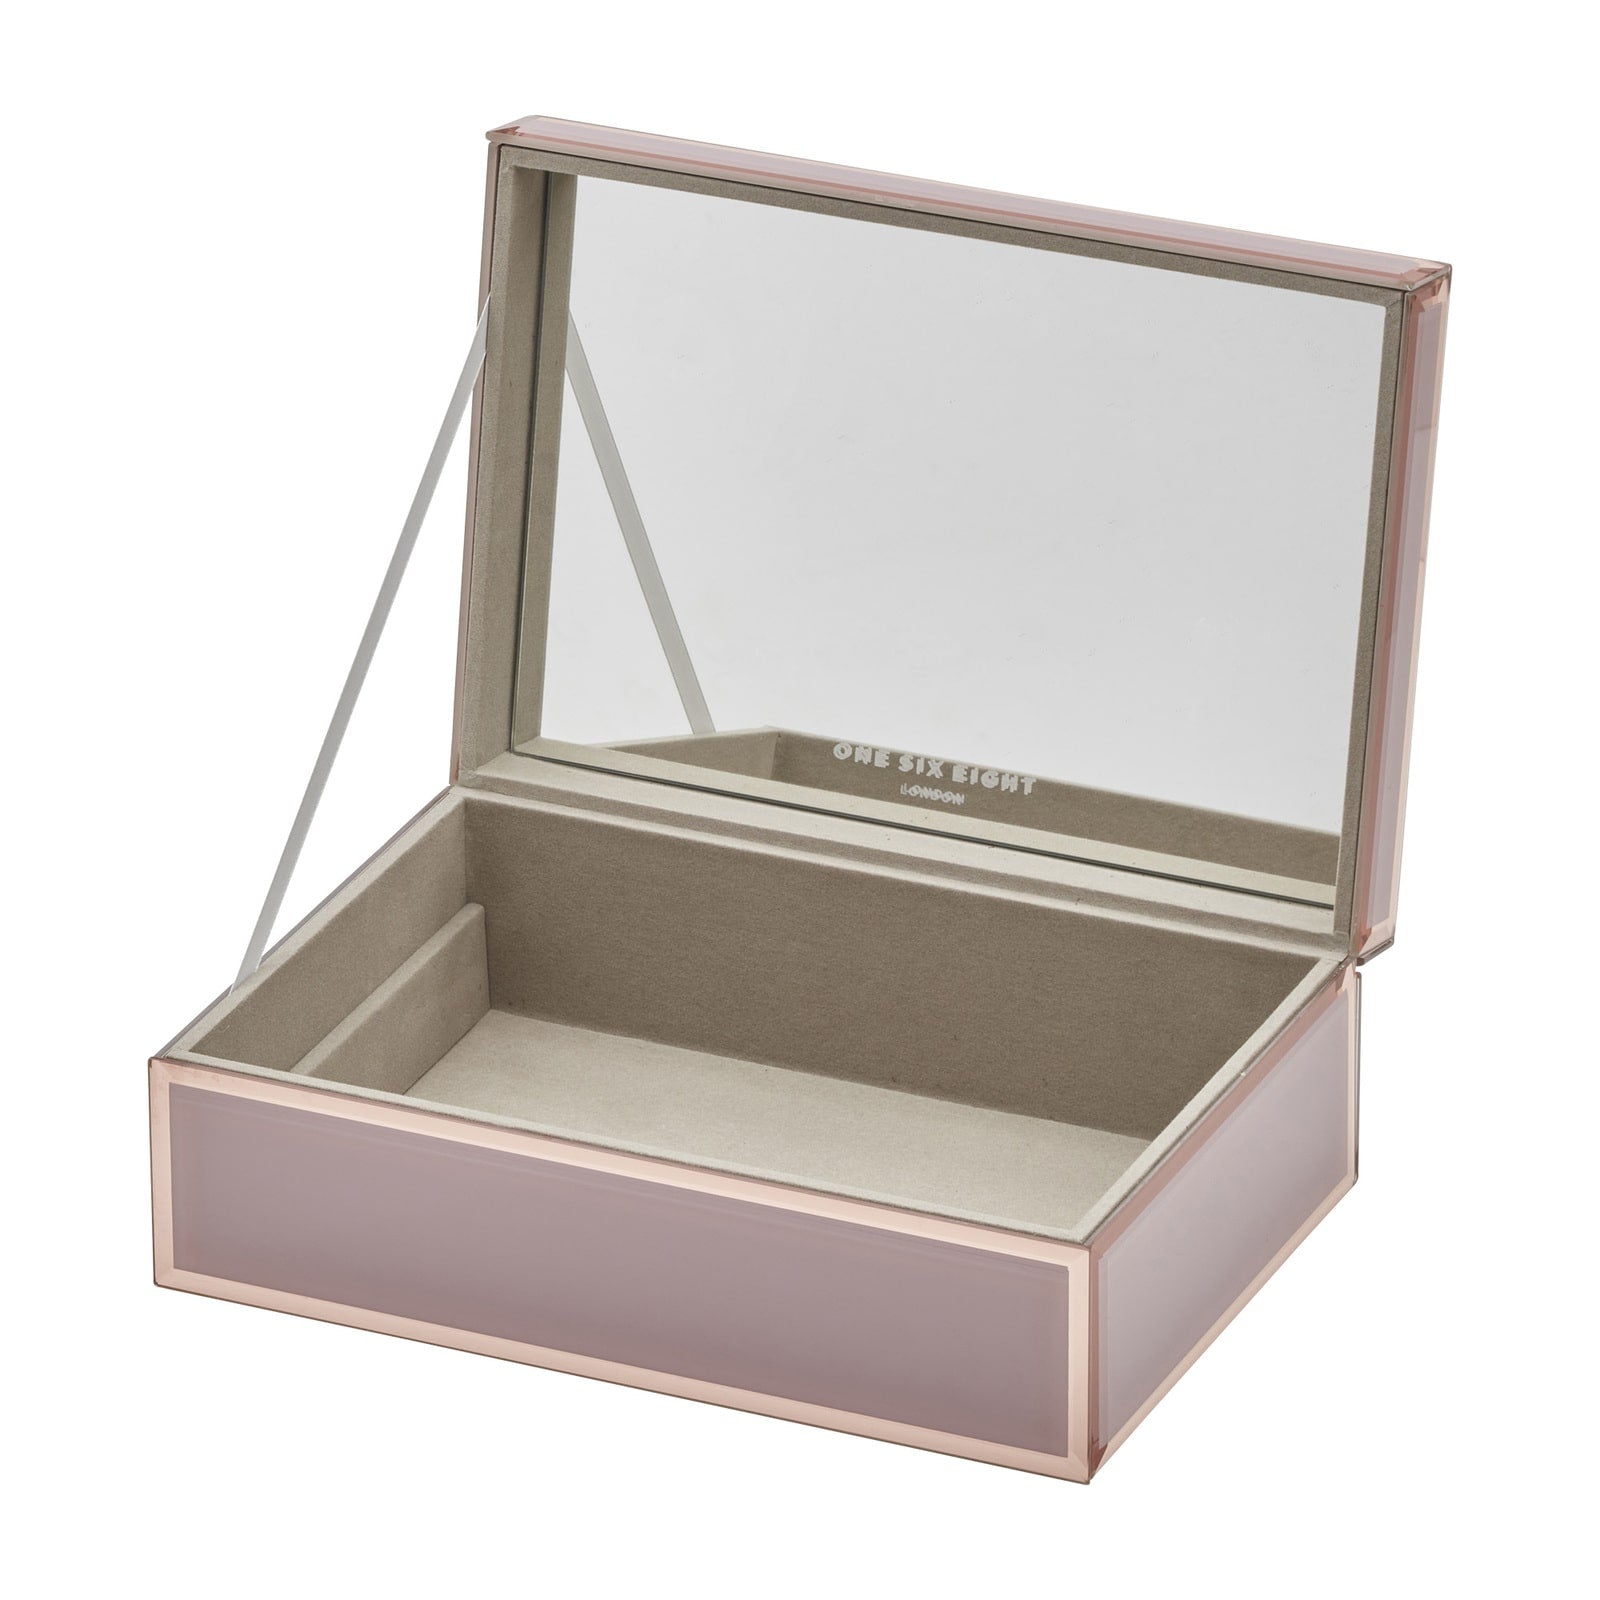 Sara Large Jewellery Box - Dusty Pink - box open, no tray